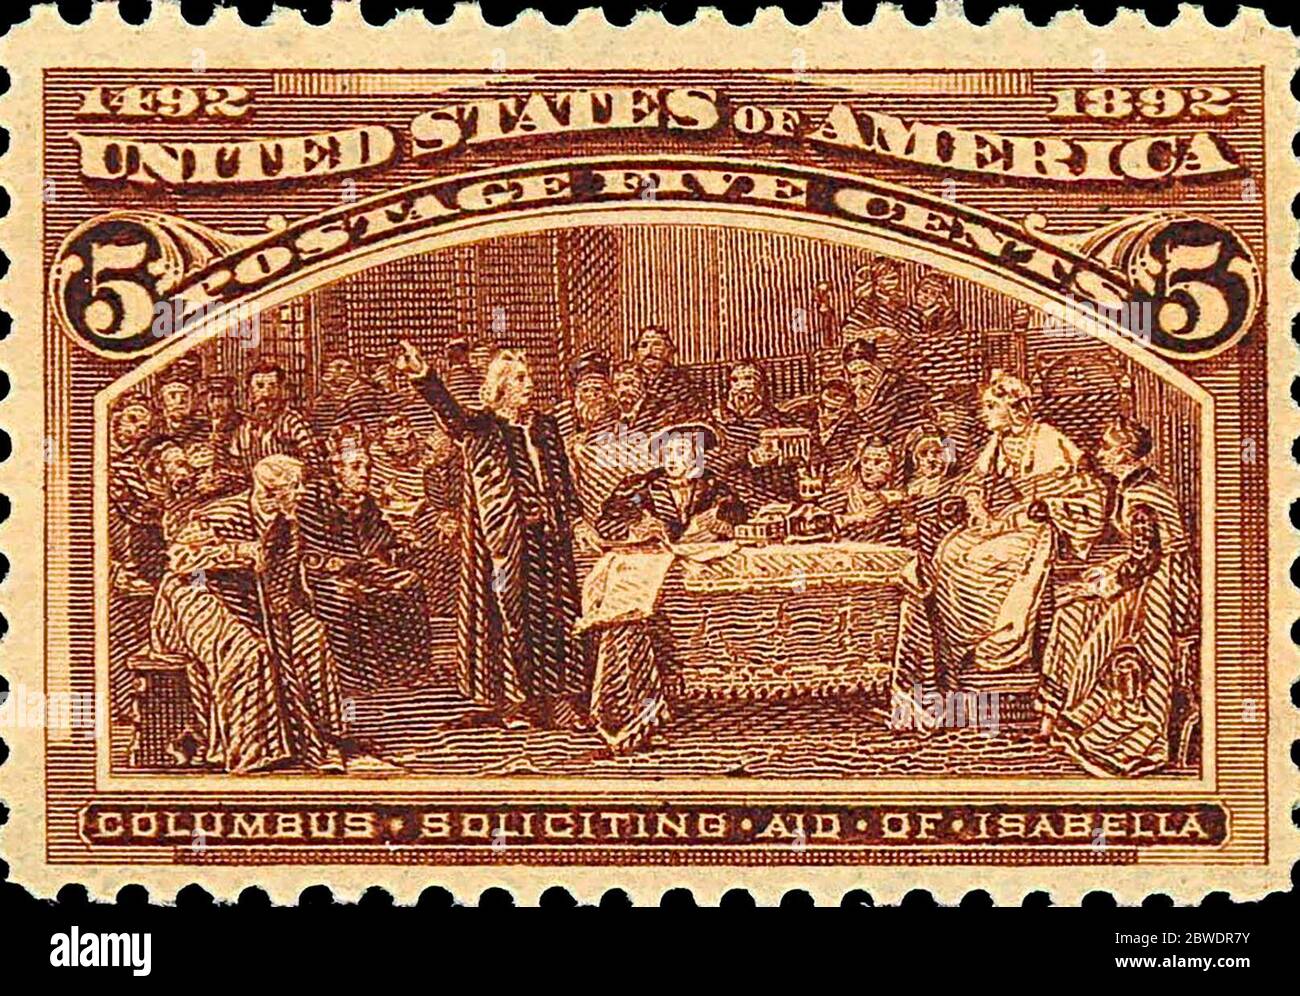 USA Post Office Columbian issue 1893 5 cents - 2 janvier 1893 - Columbus sollicitant l'aide d'Isabella Banque D'Images